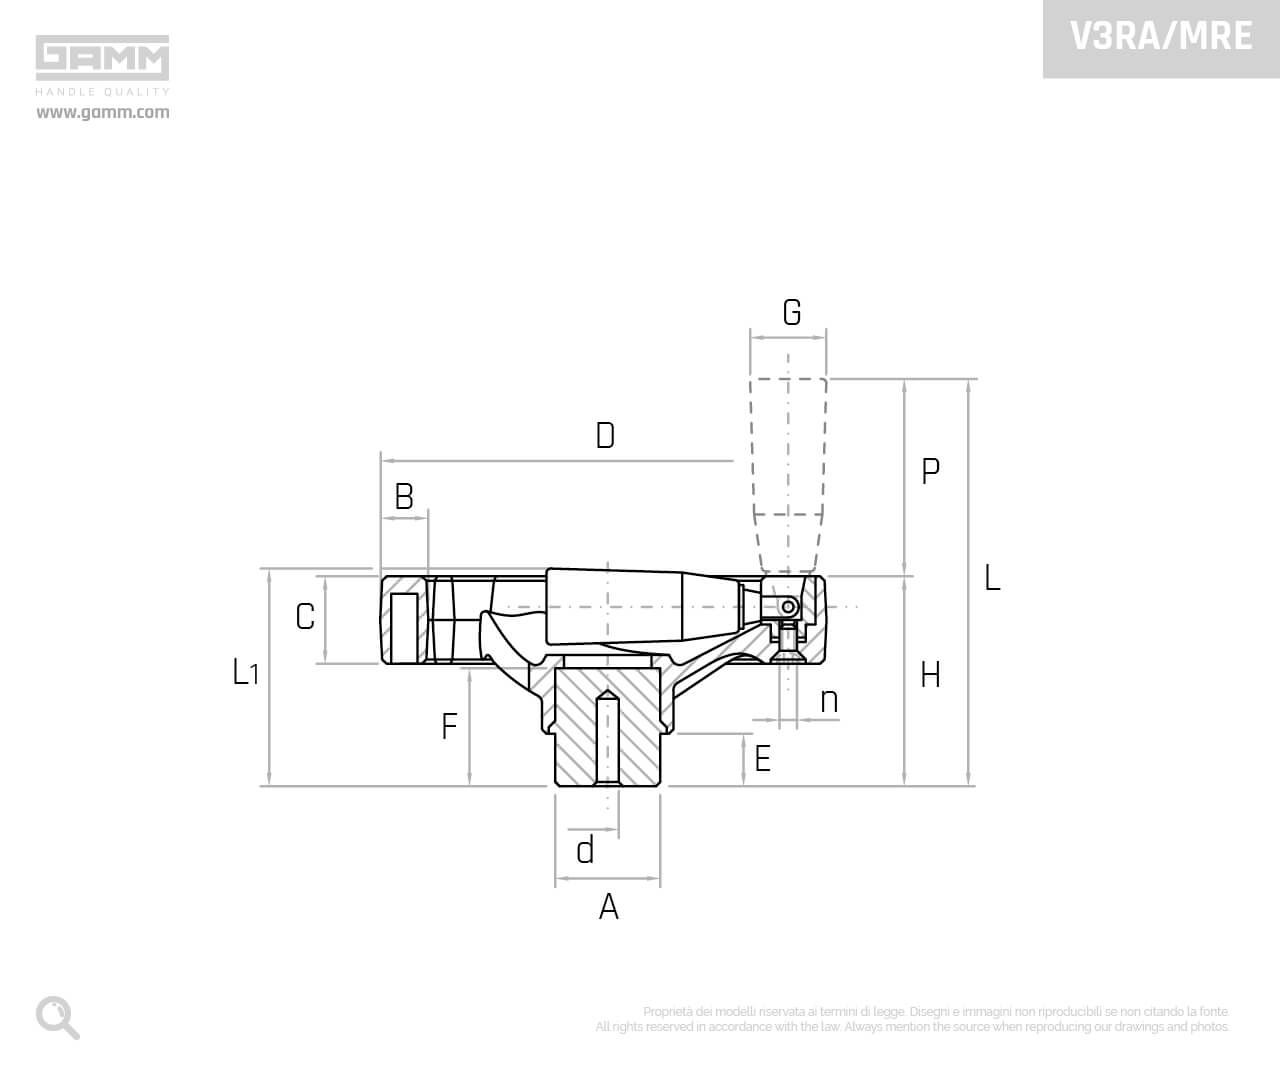 V3RA MRE disegno volantini di manovra GAMM